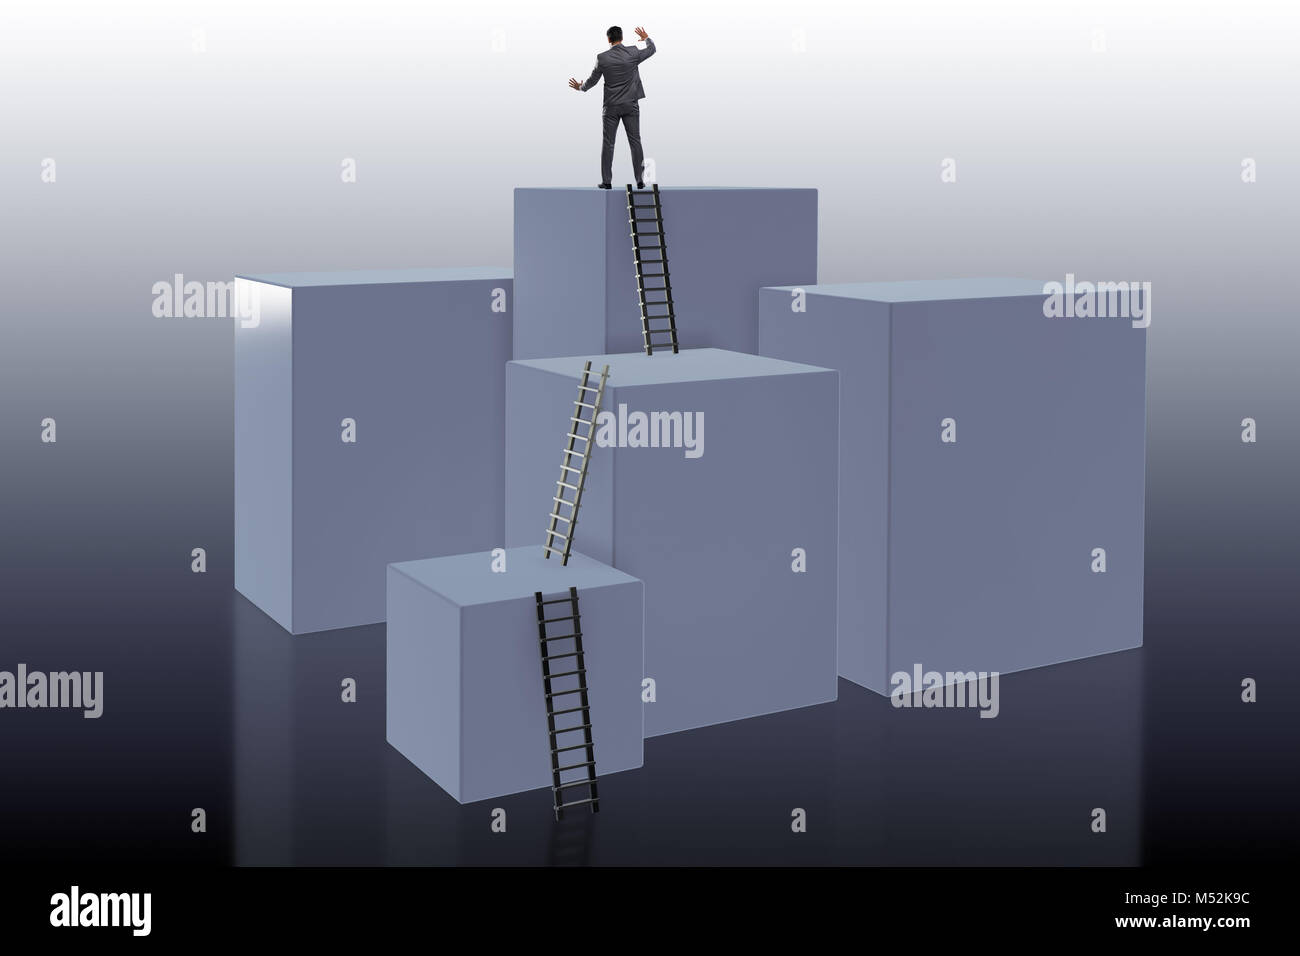 Businessman climbing blocks in challenge business concept Stock Photo